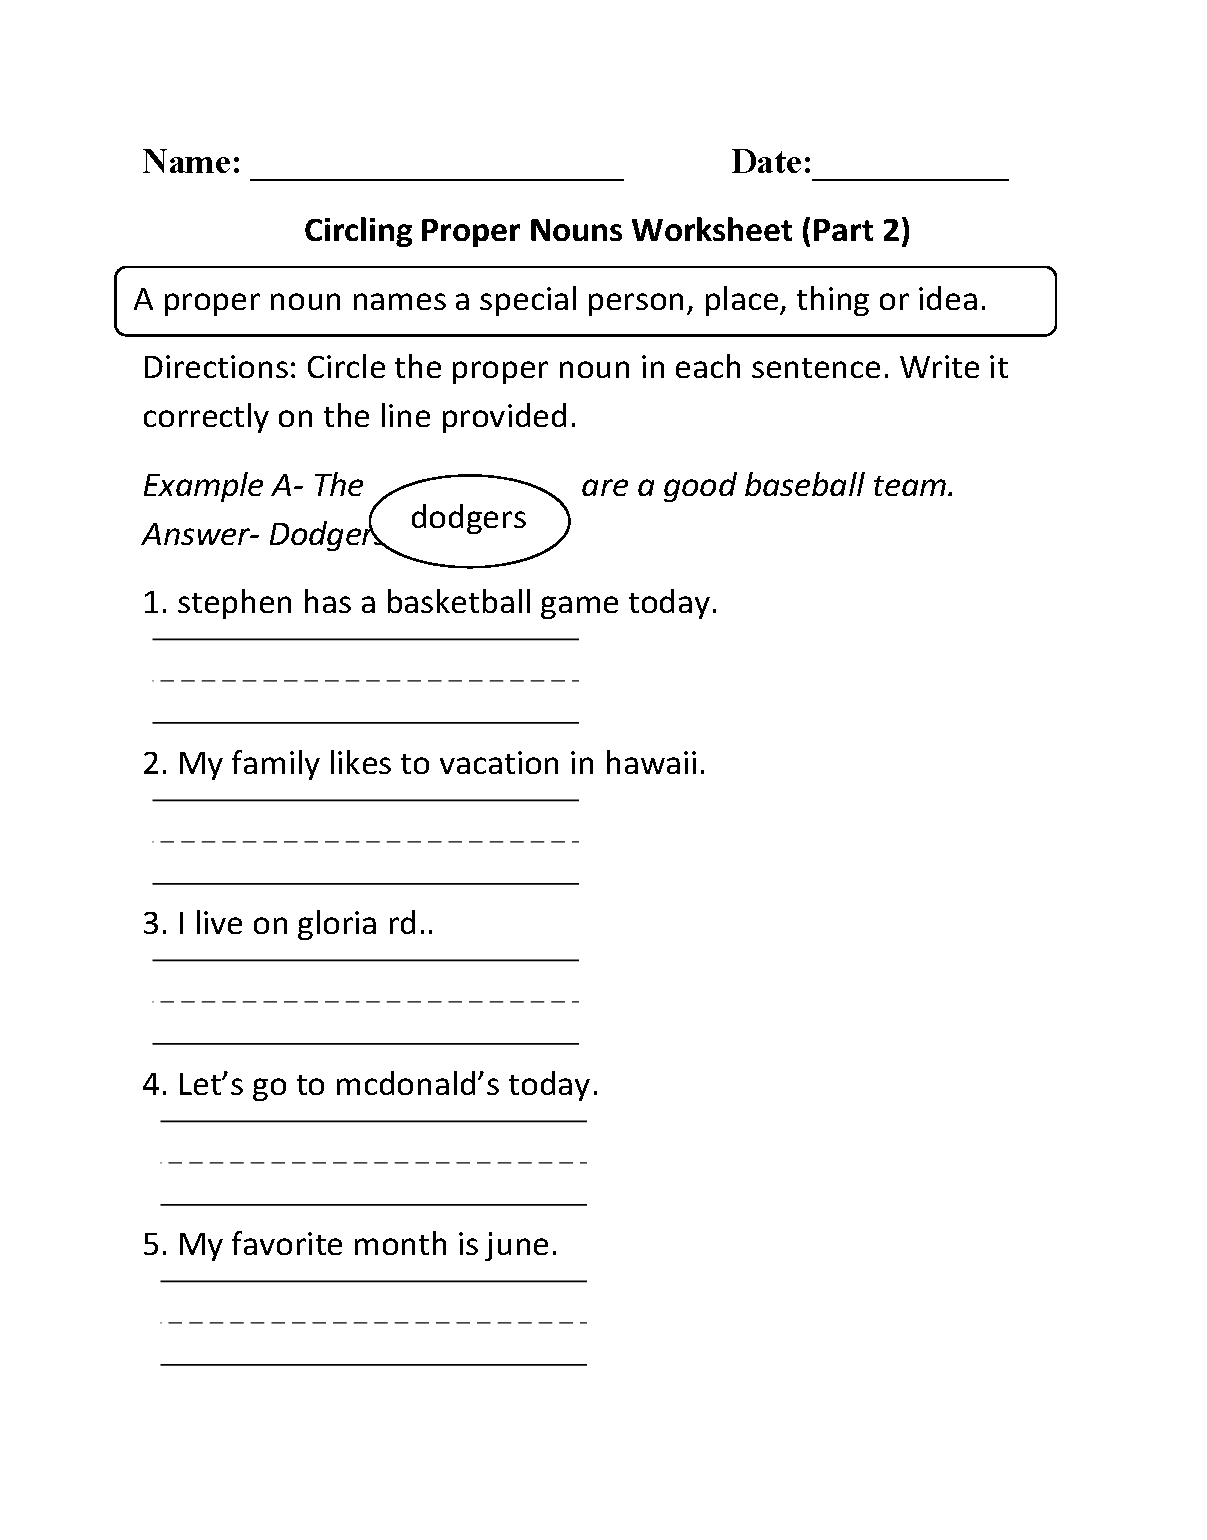 Circling Proper Nouns Worksheet Part 2